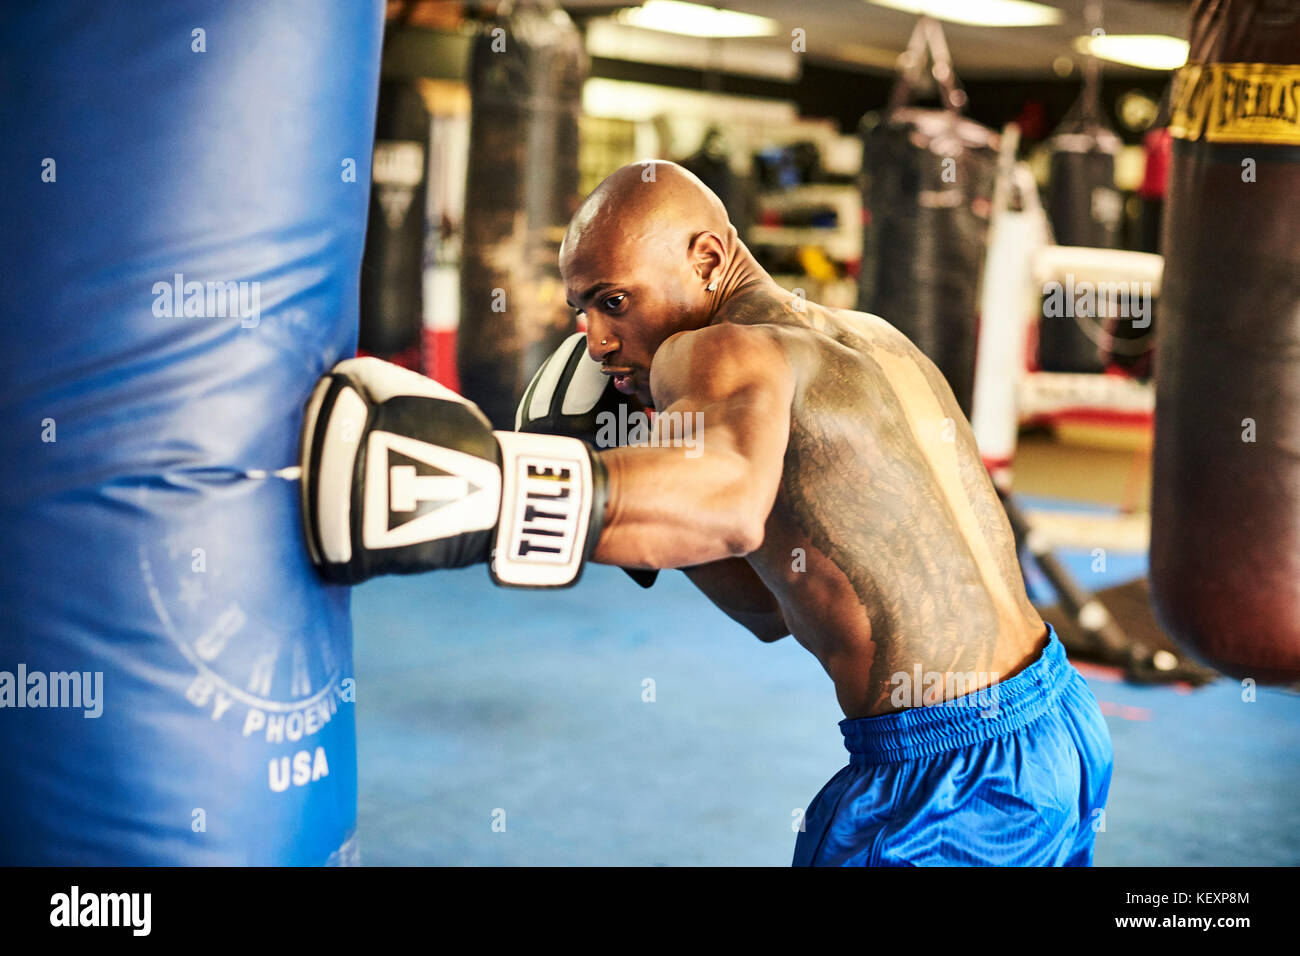 Männliche boxer Training im Fitnessraum mit Boxsack, Taunton,  Massachusetts, USA Stockfotografie - Alamy